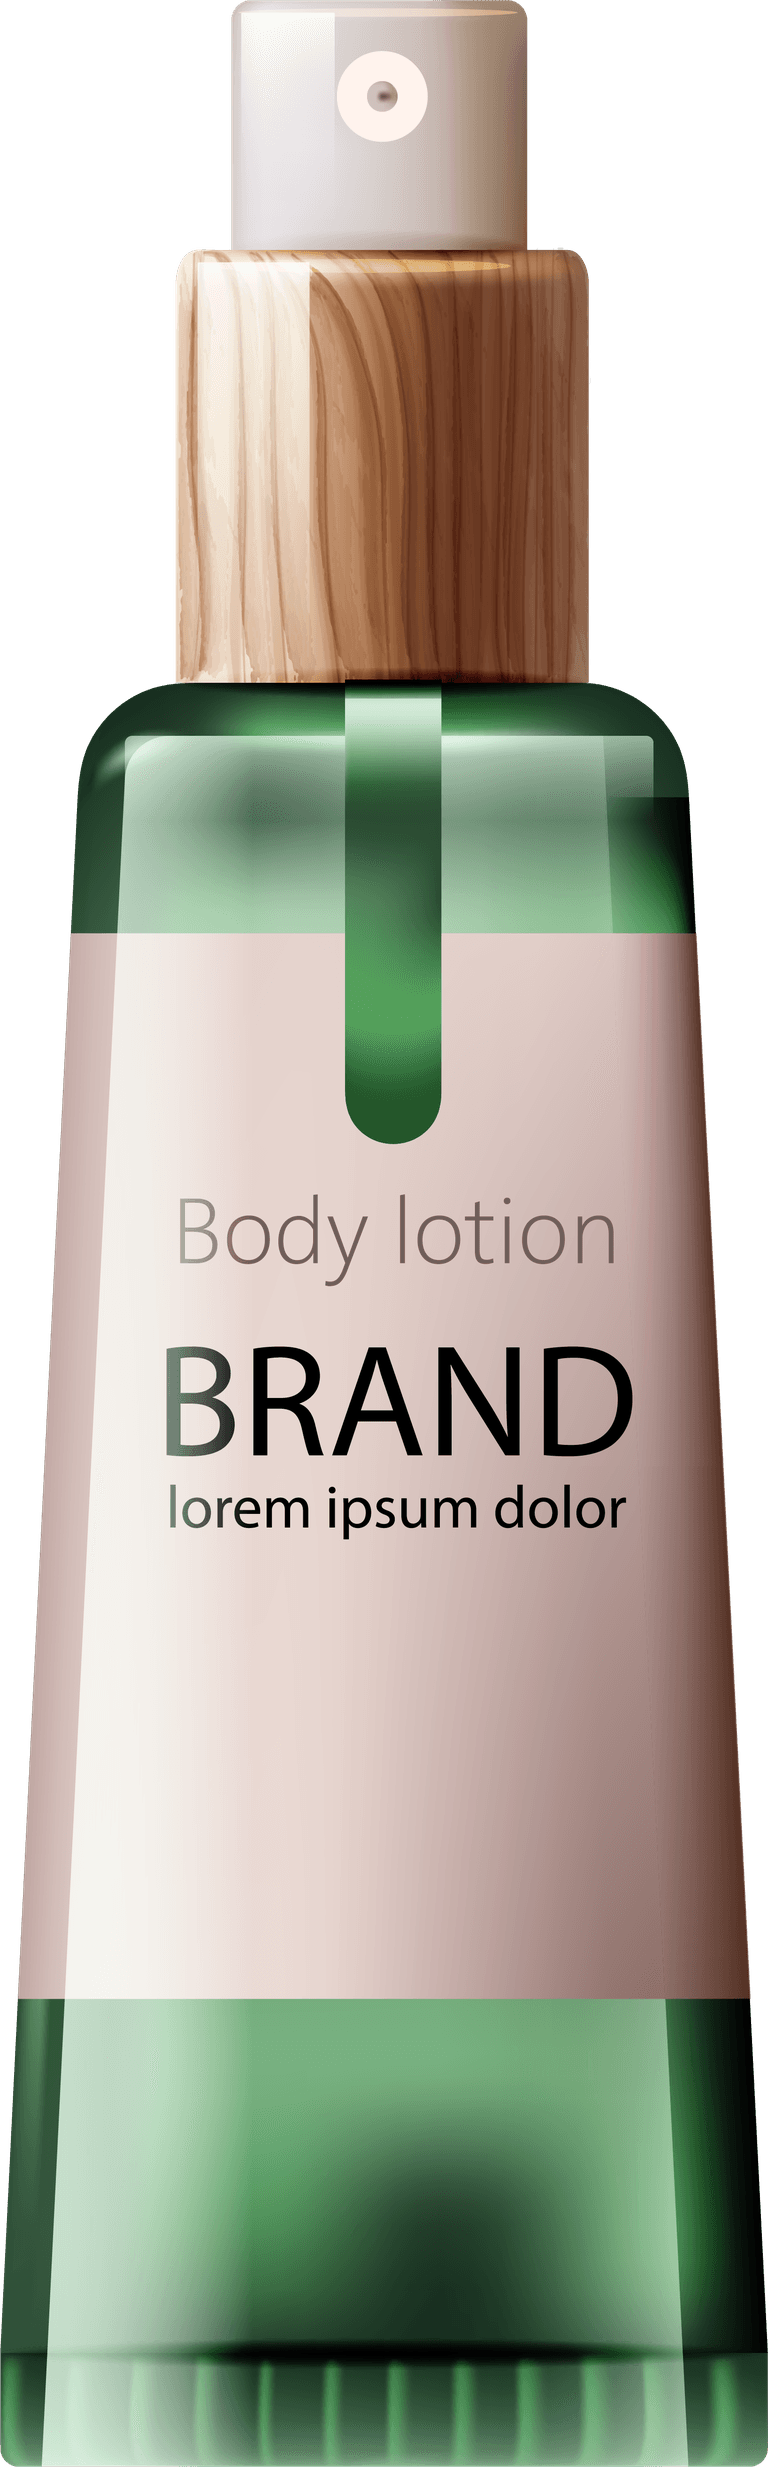 set various health care spa green bottles body oil lotion serum shower gel perfume